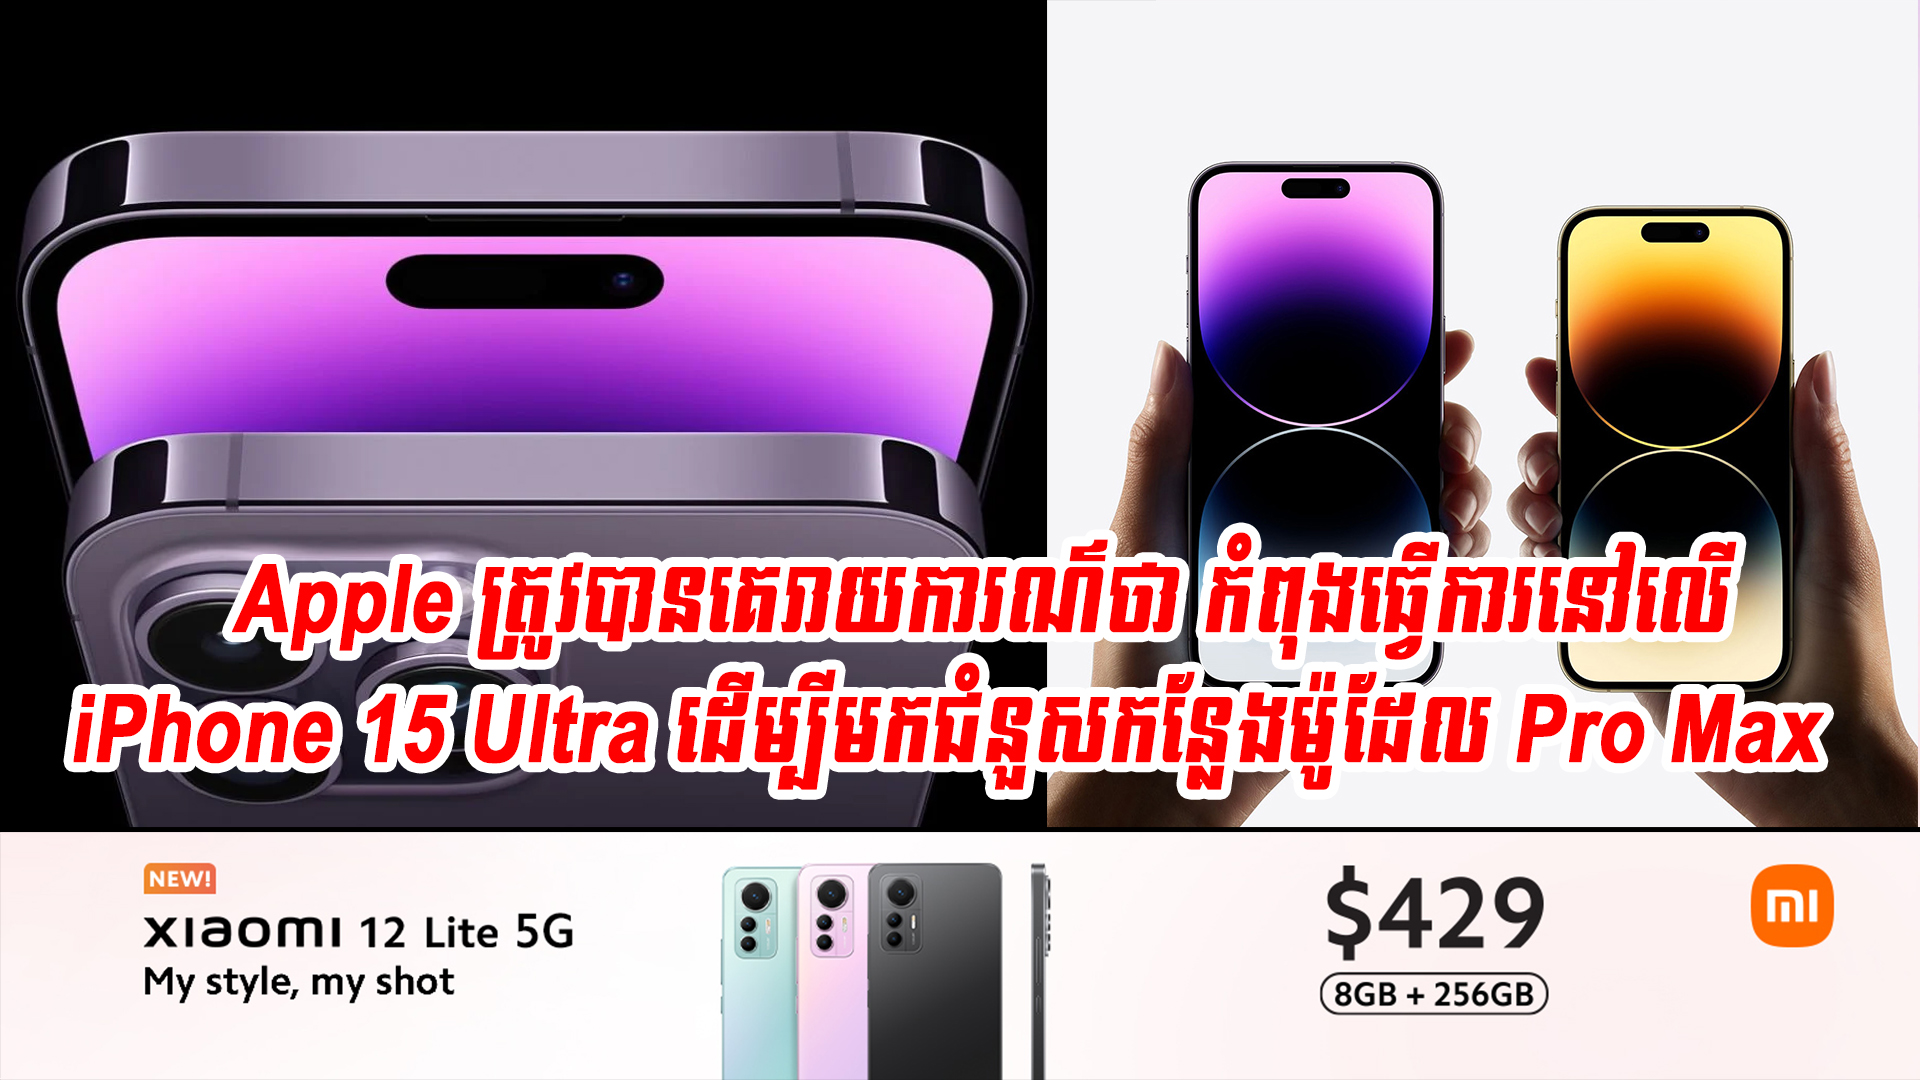 Apple ត្រូវបានគេរាយការណ៌ថា កំពុងធ្វើការនៅលើ iPhone 15 Ultra ដើម្បីមកជំនួសកន្លែងម៉ូដែល Pro Max